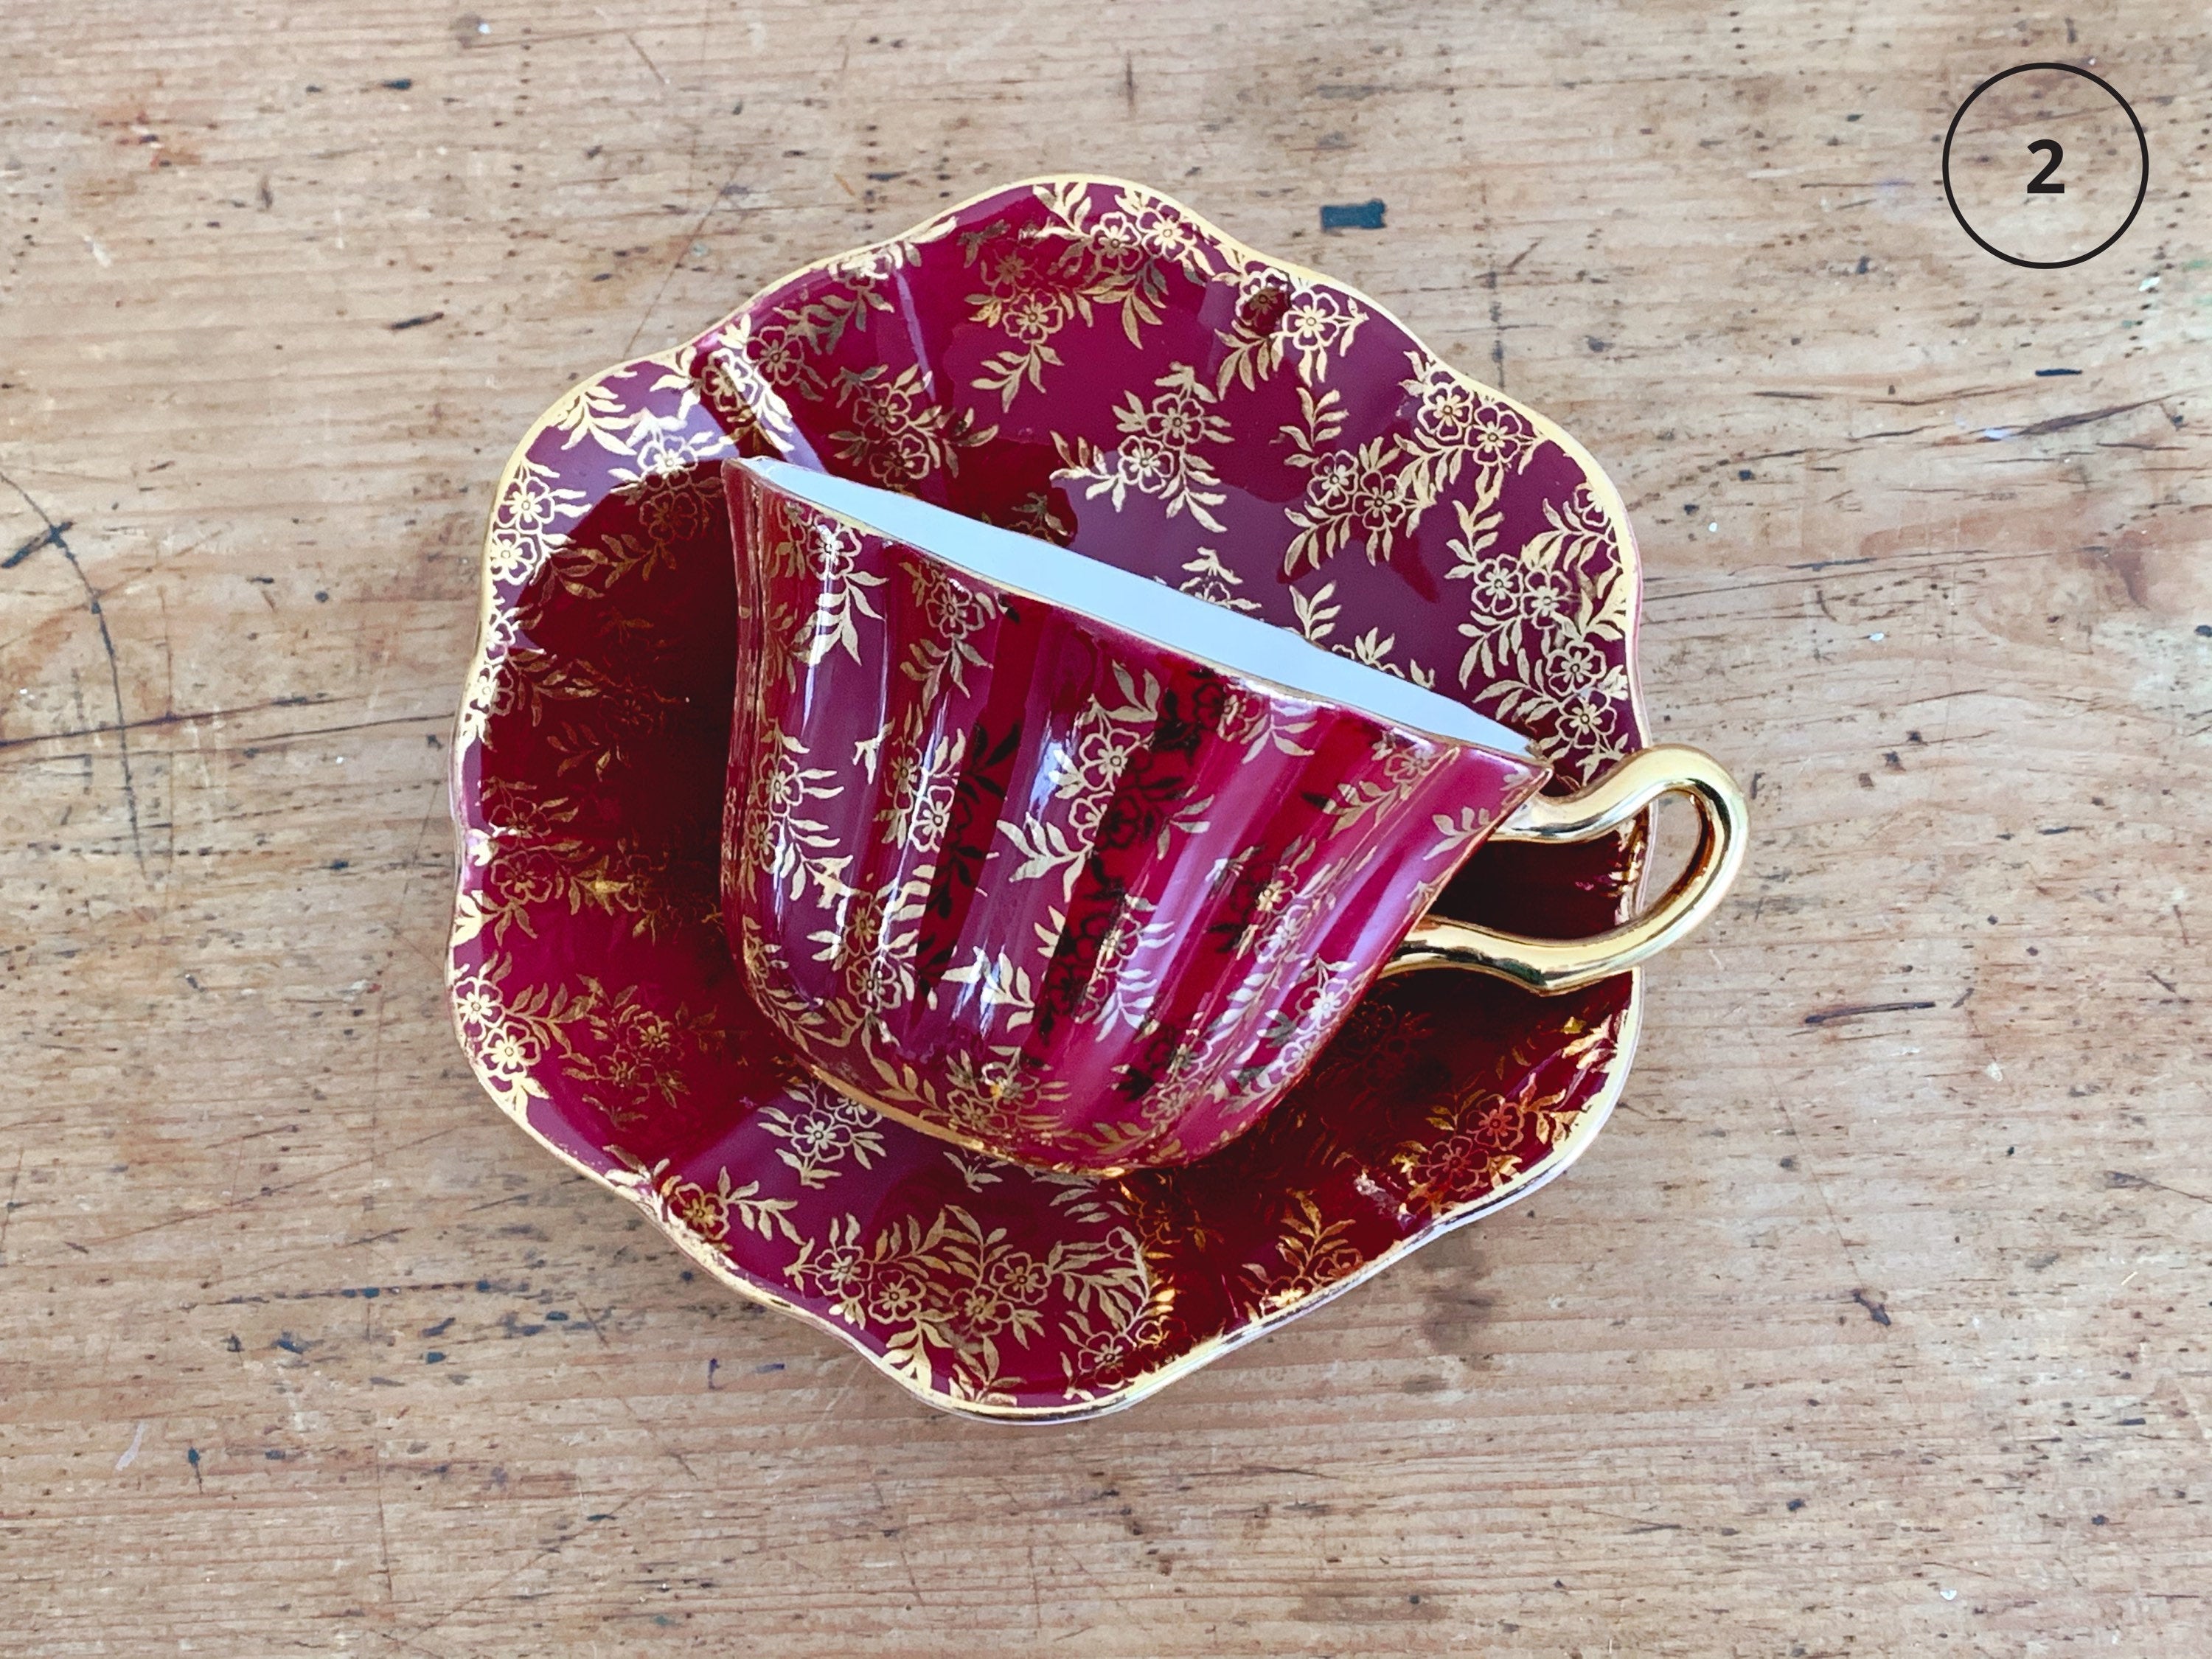 Assorted Vintage Fine China Tea Cup and Saucer | Royal Stuart Bone China | Elizabethan | Japanese Iridescent Porcelain Tea Set